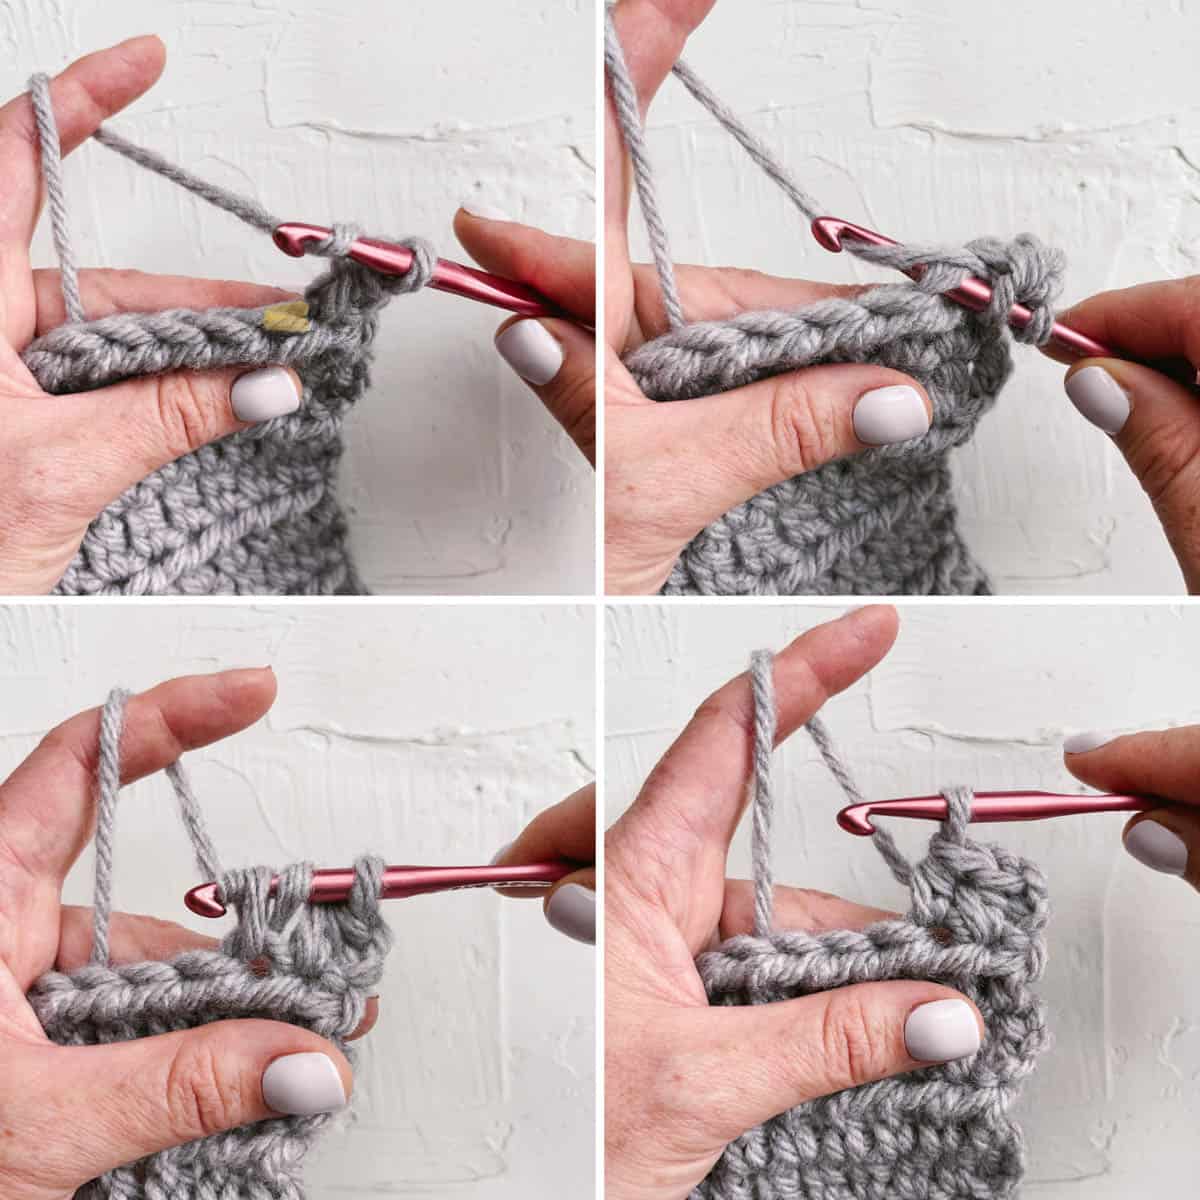 Steps 1-4 of crocheting a hdc stitch.